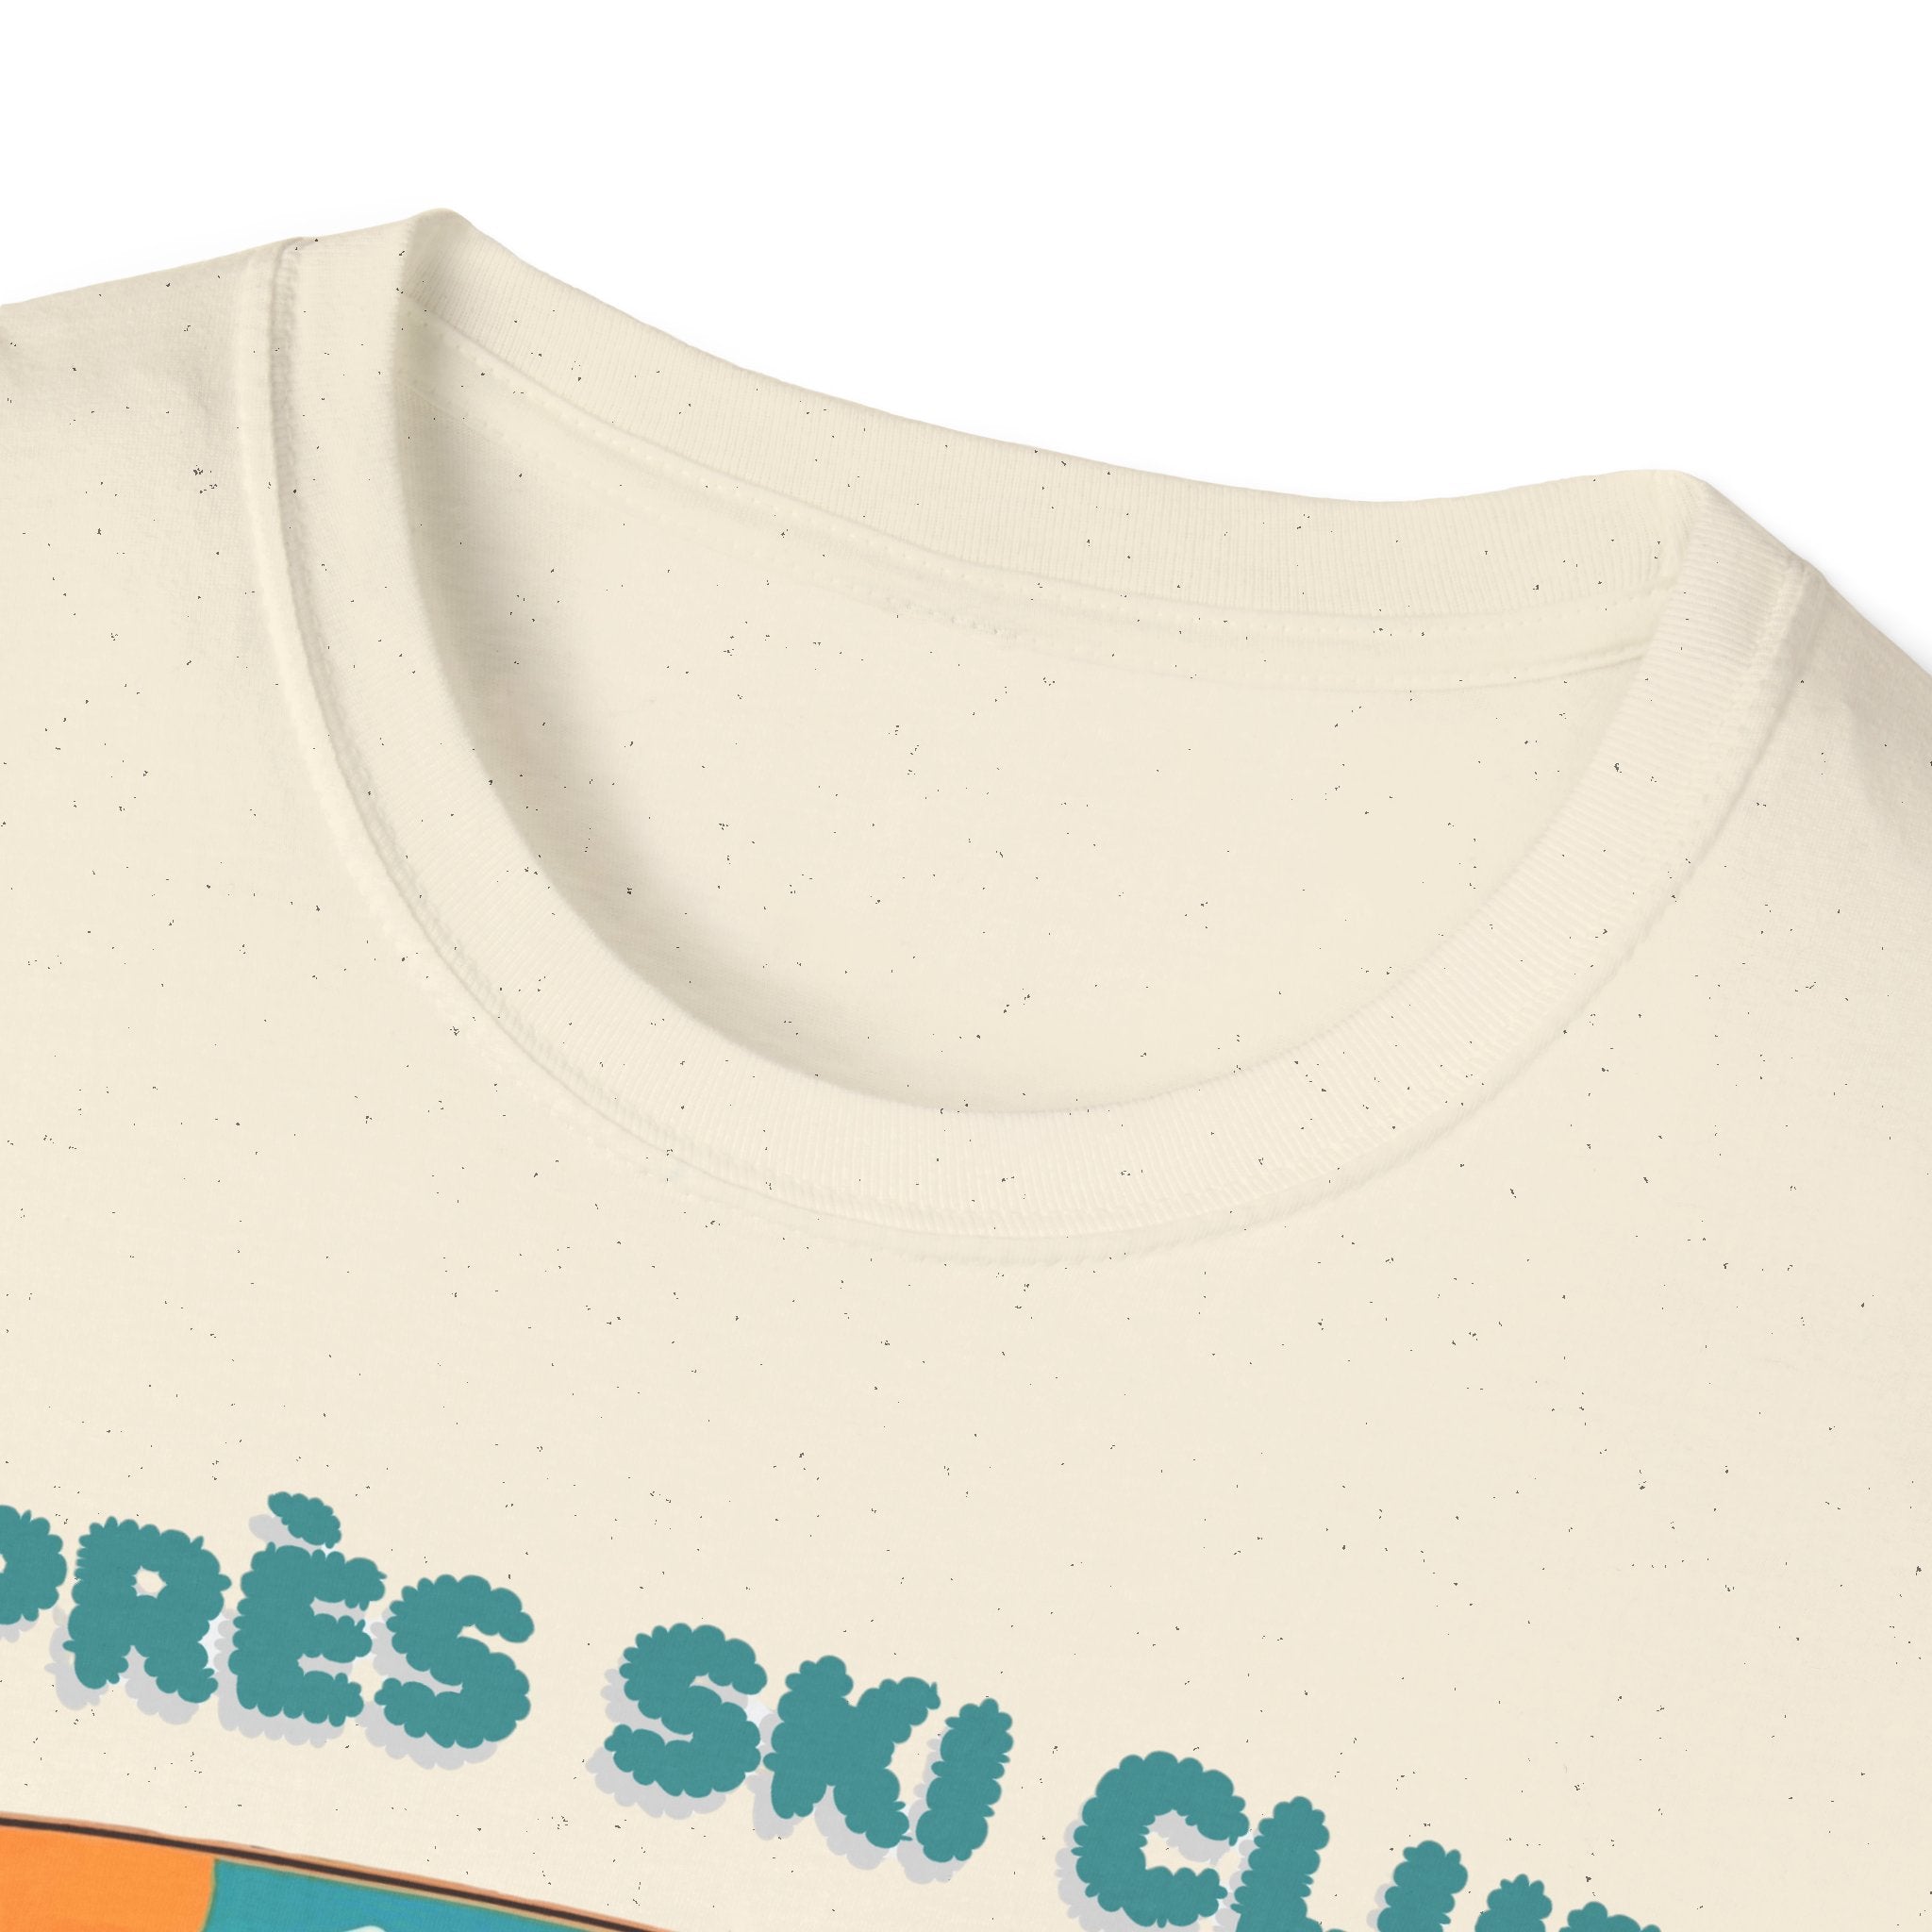 Après Ski Club T-Shirt